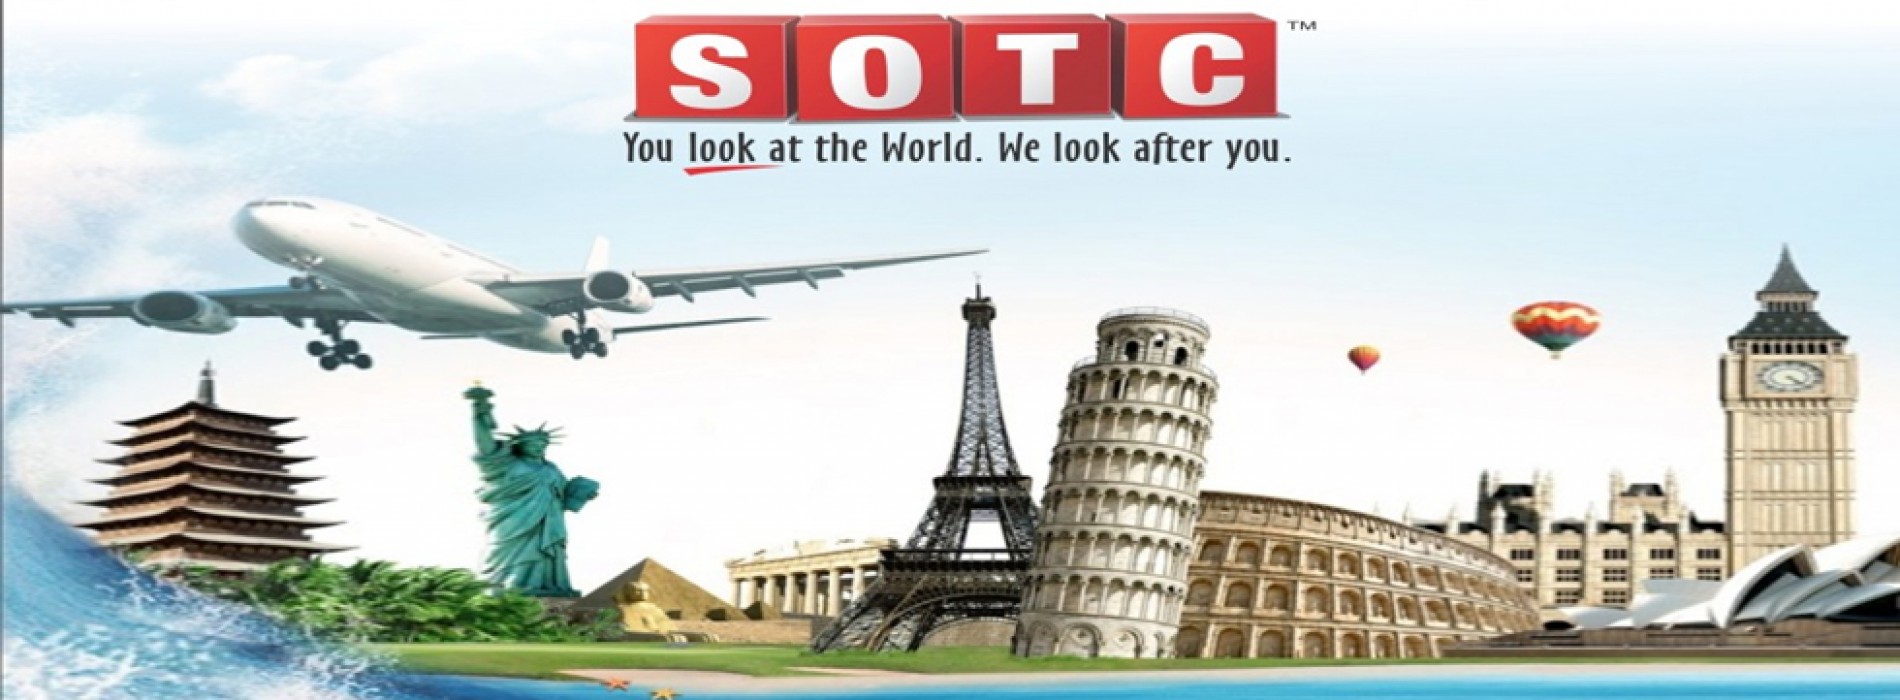 SOTC observes huge potential for International Luxury Travel